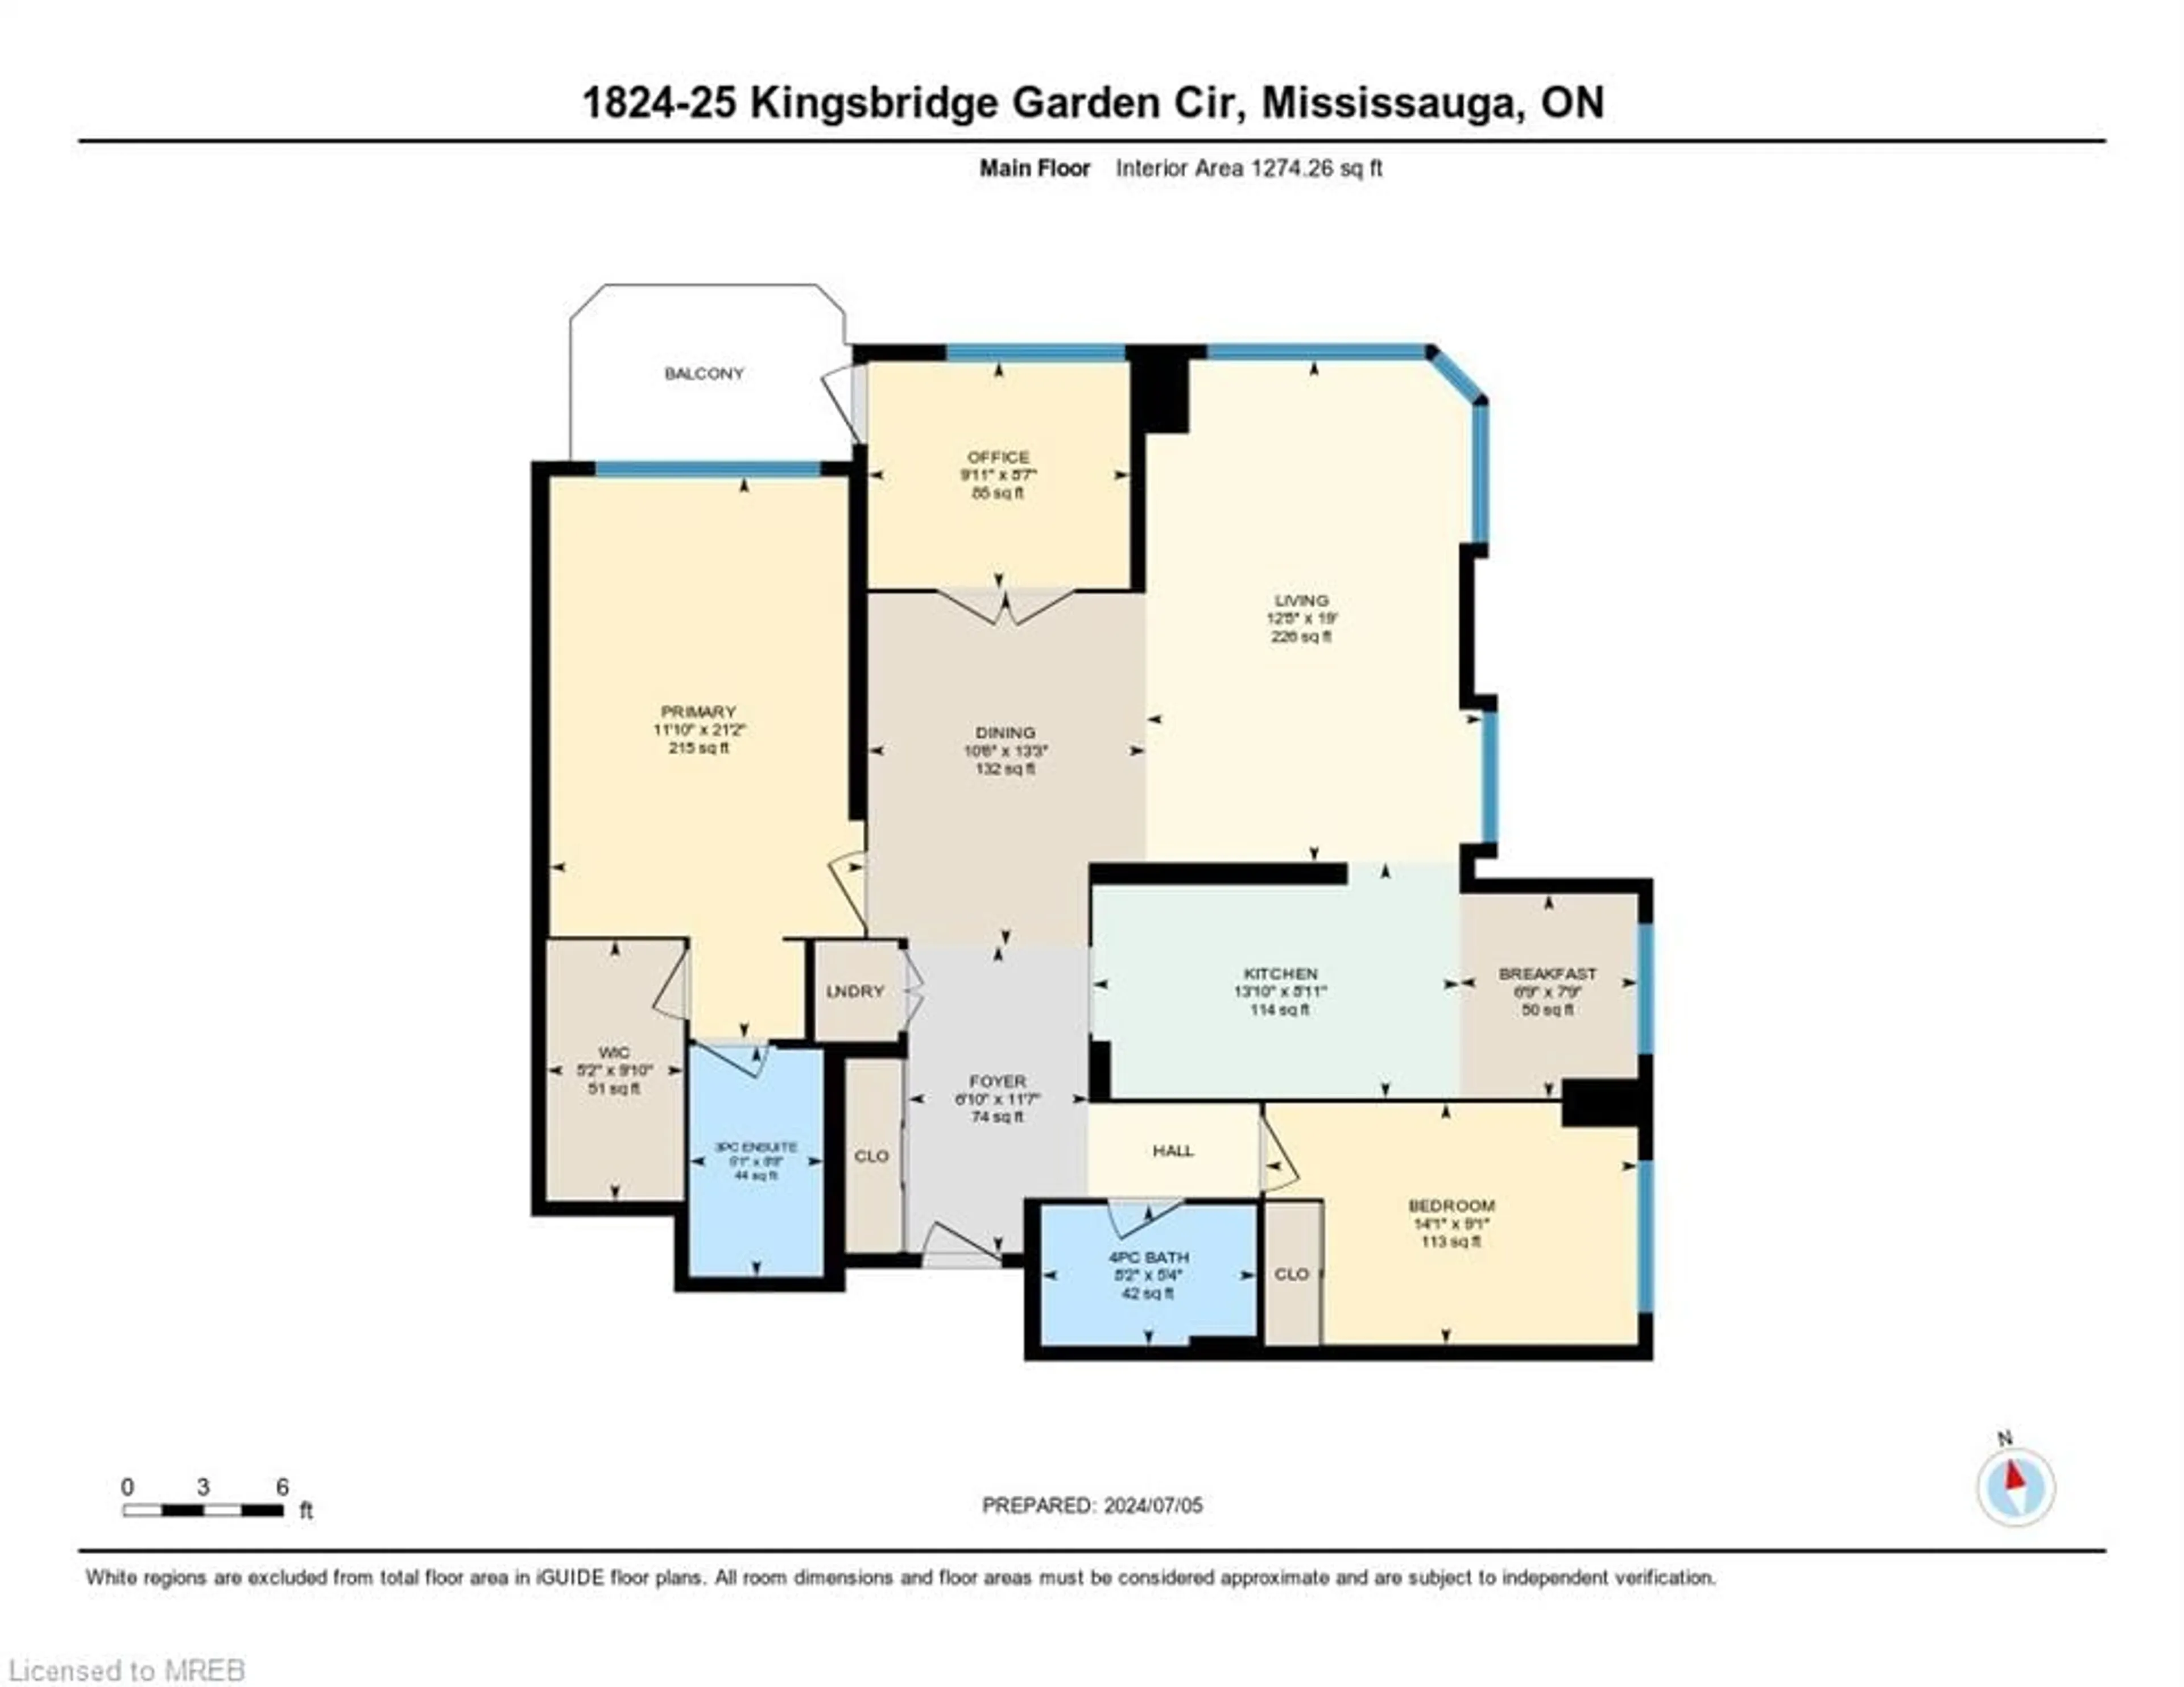 Floor plan for 25 Kingsbridge Garde Cir #1824, Mississauga Ontario L5R 4B1